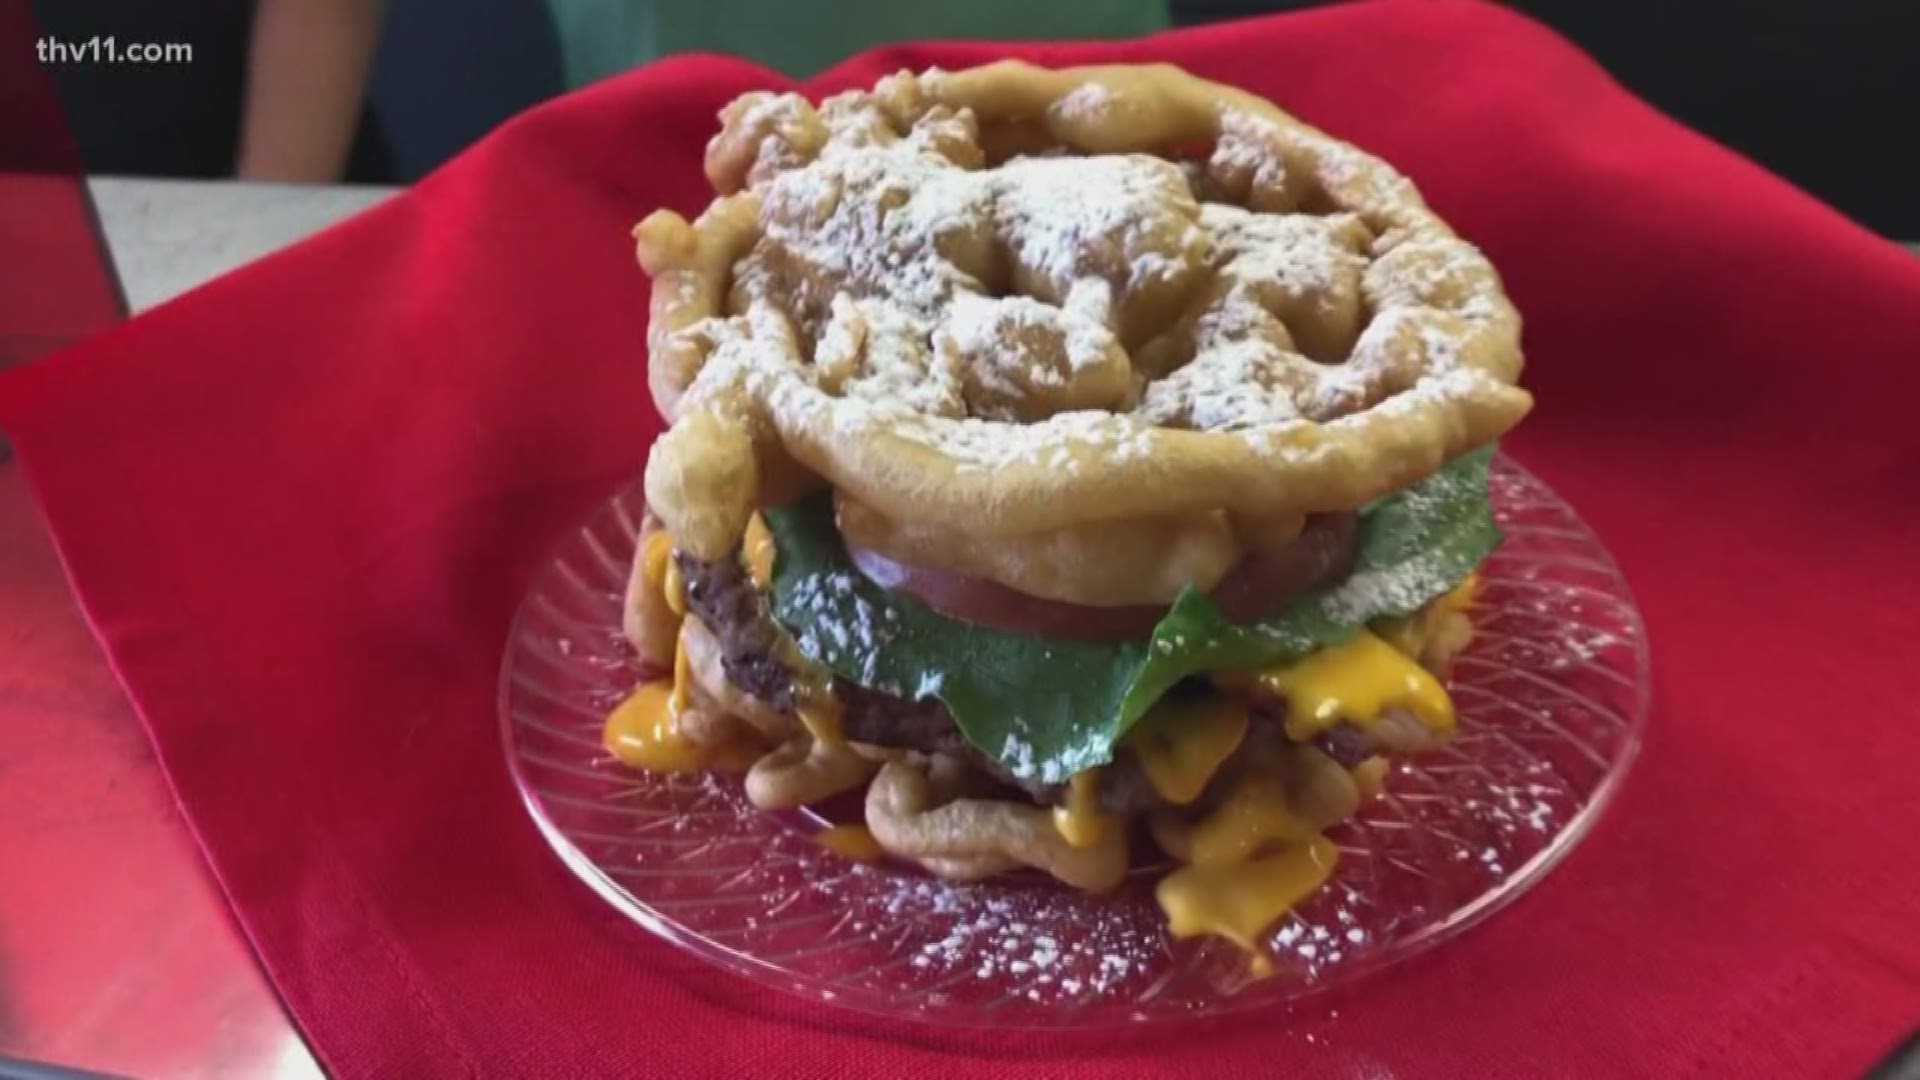 Arkansas State Fair offering Fair Food ToGo at fairgrounds this week